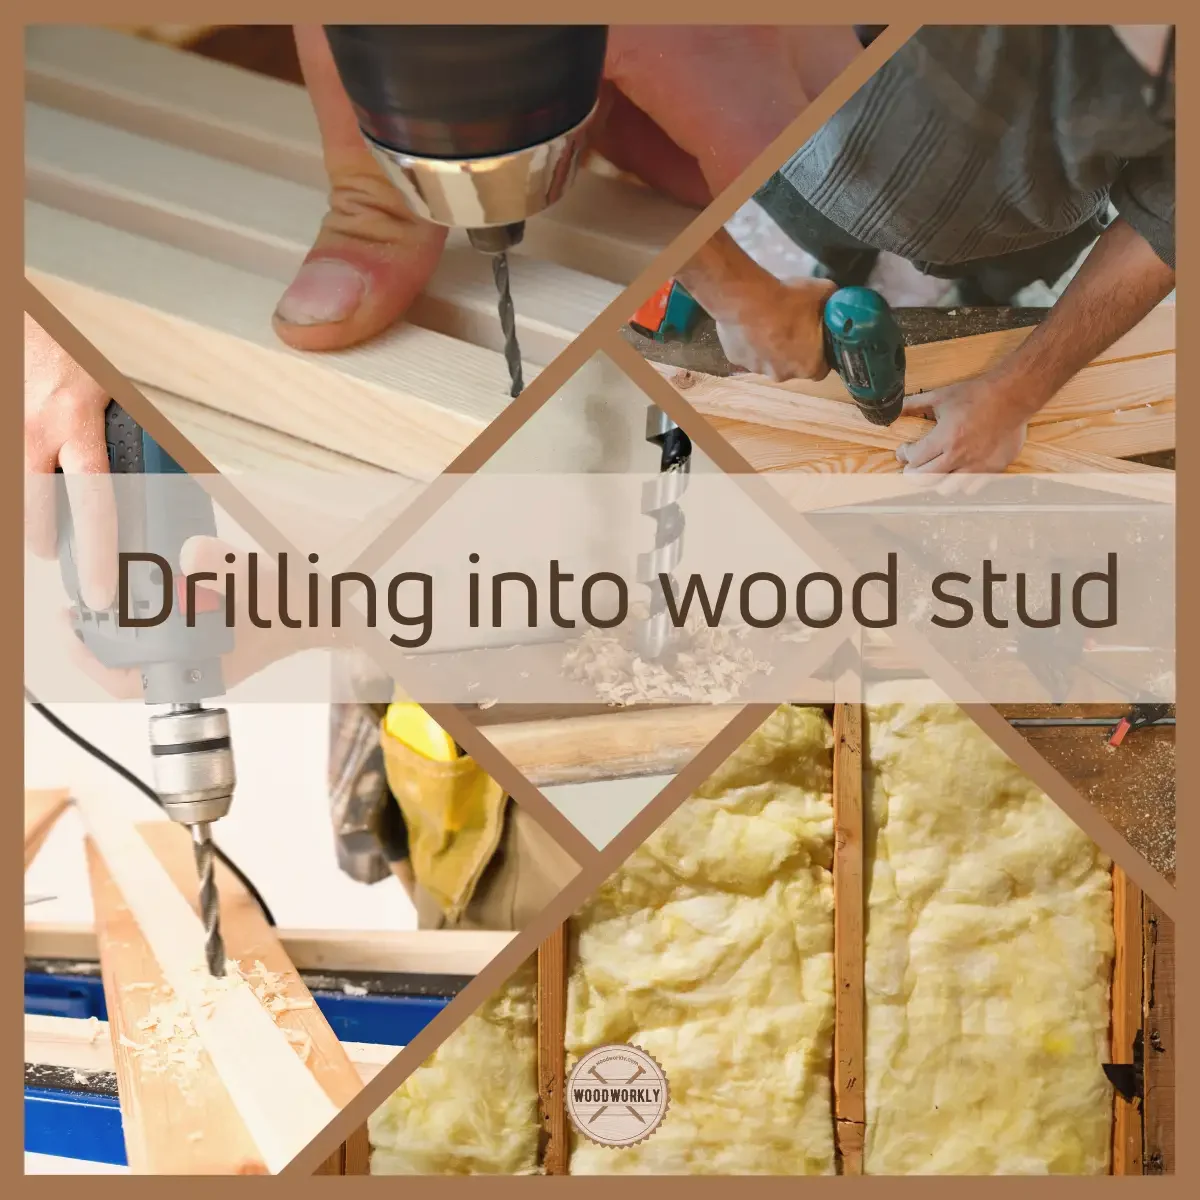 Drilling into wood stud